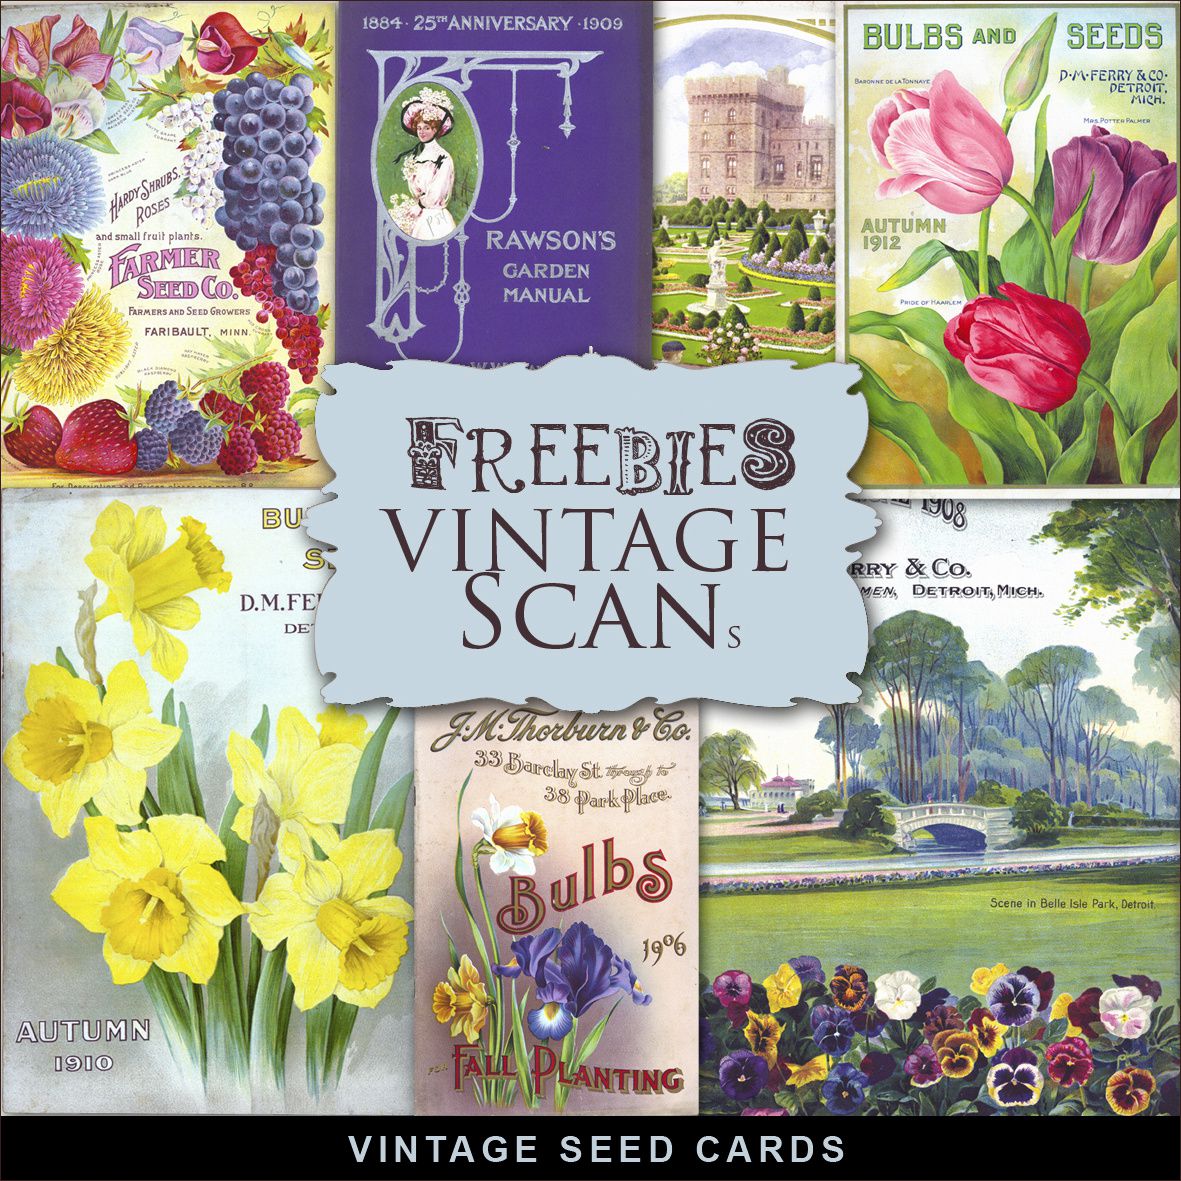 Freebies-vintage-scans-cards-theme-autumn-